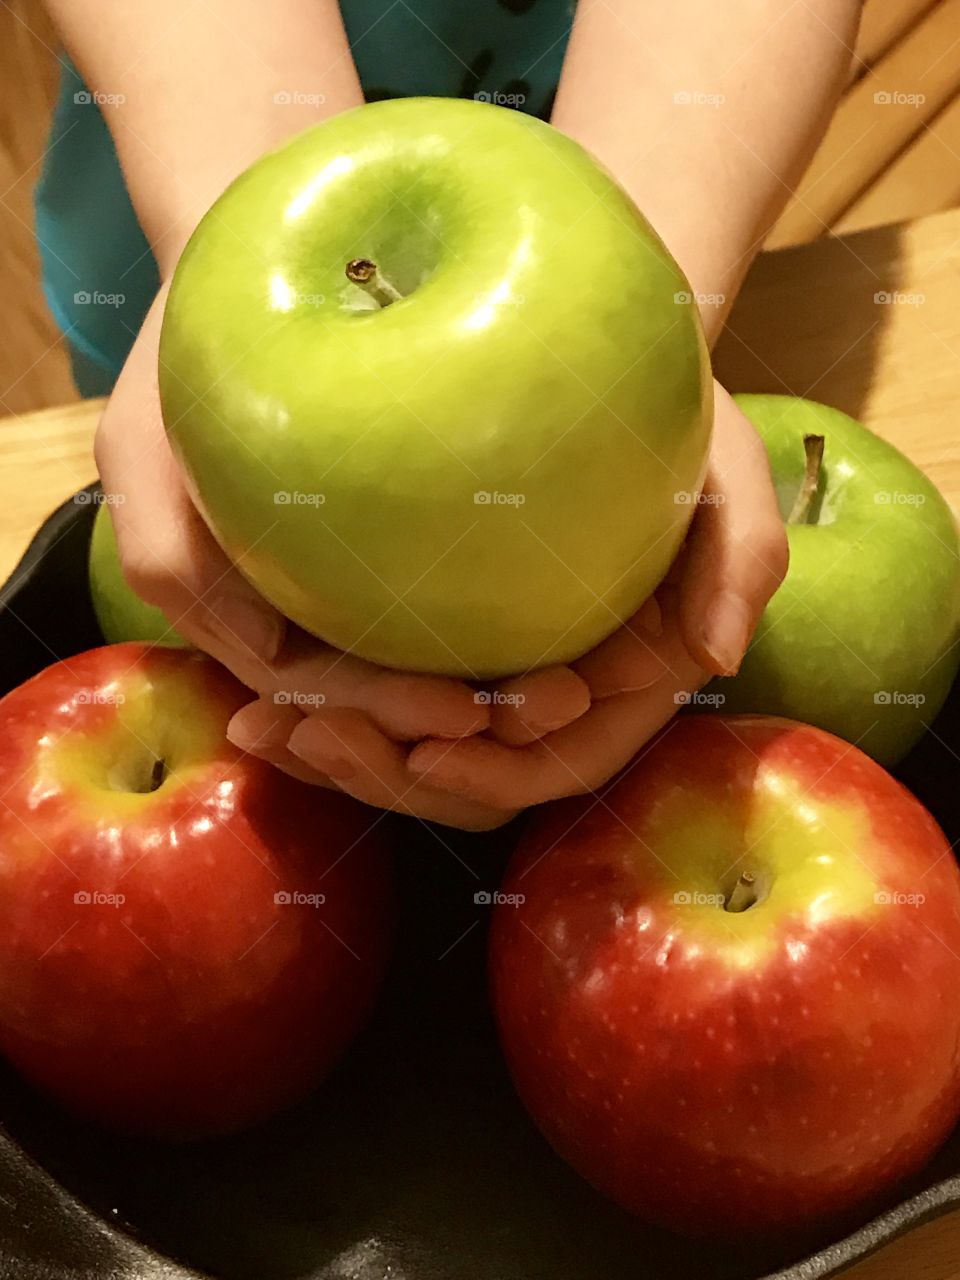 Human hand holding apple